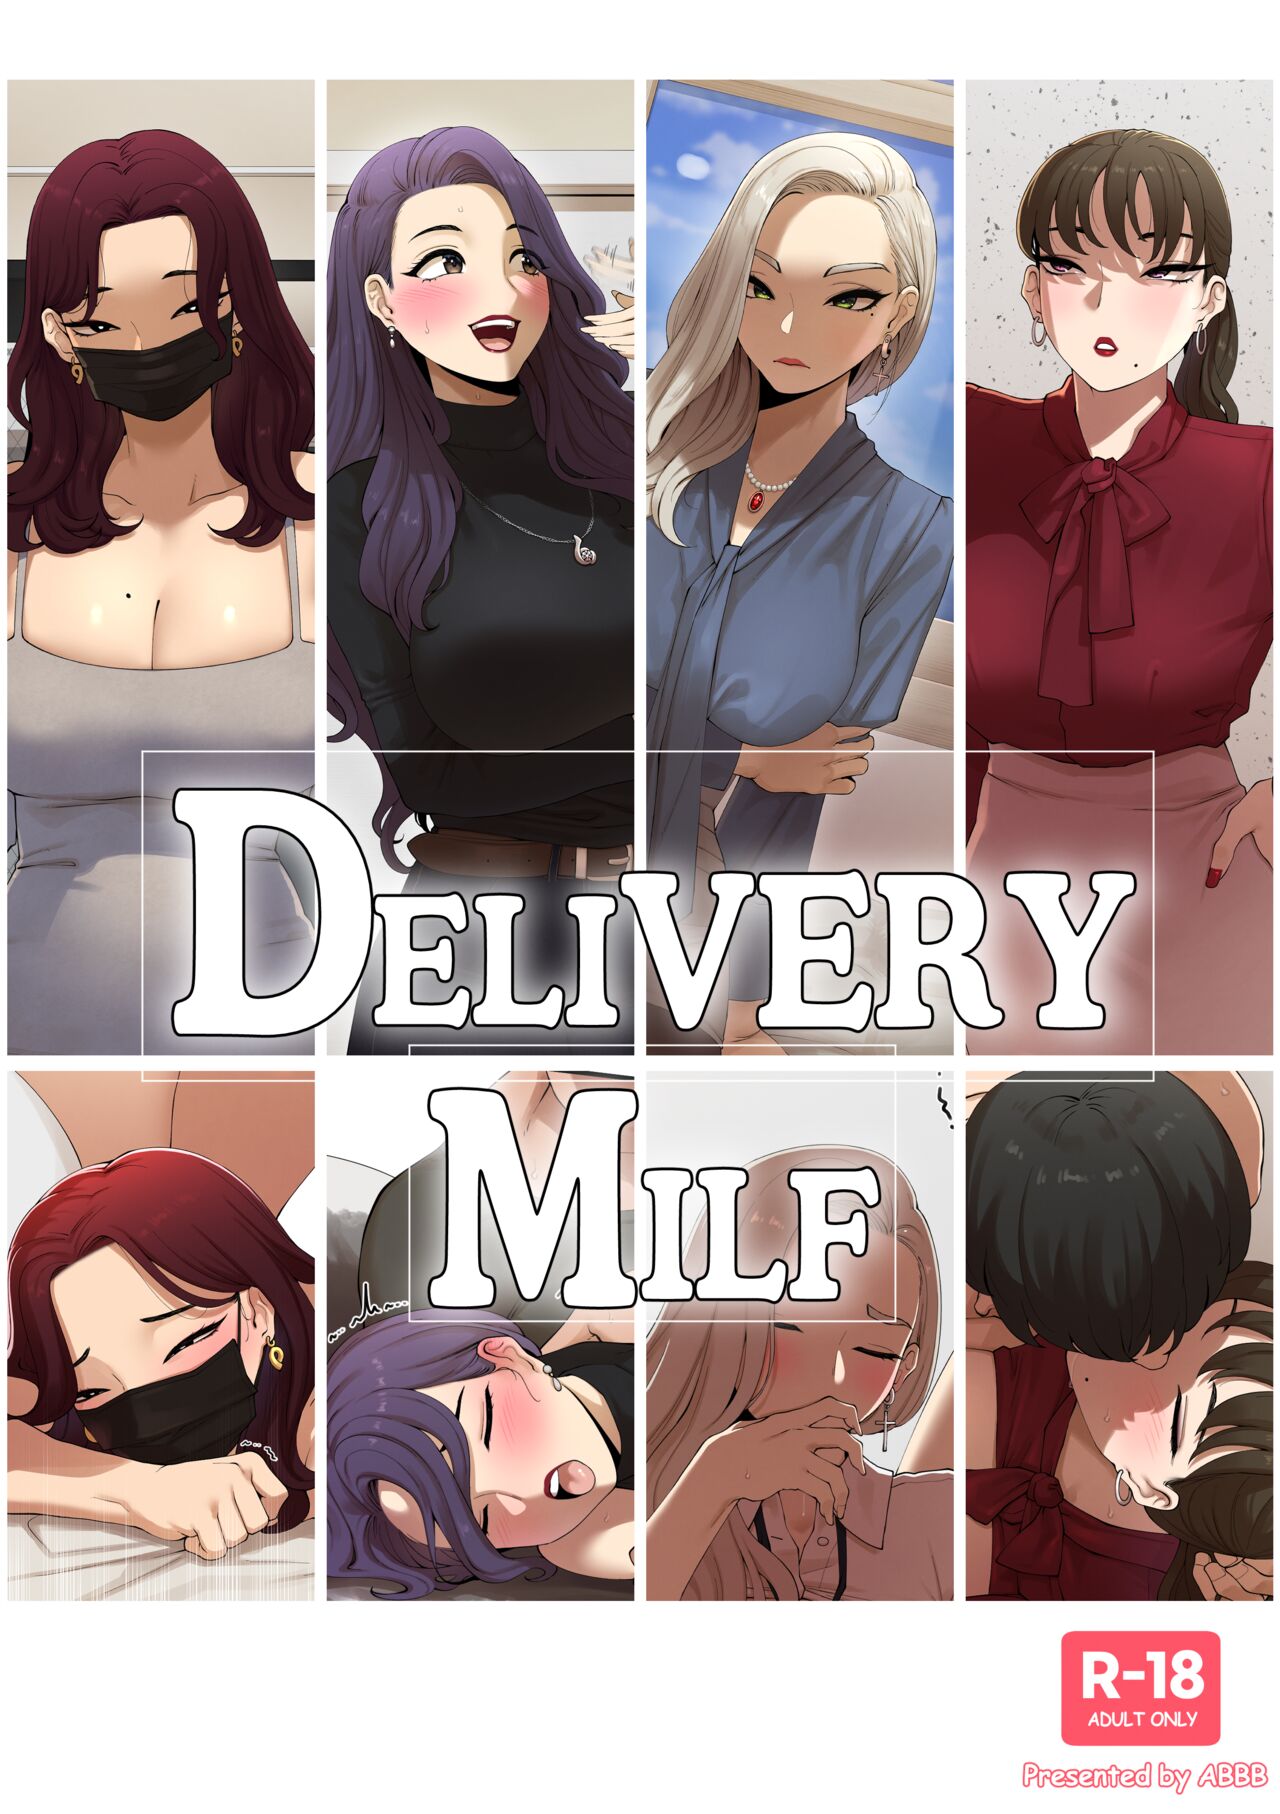 Xxx Normal Delivary Oparetion - Delivery MILF [ABBB] Porn Comic - AllPornComic